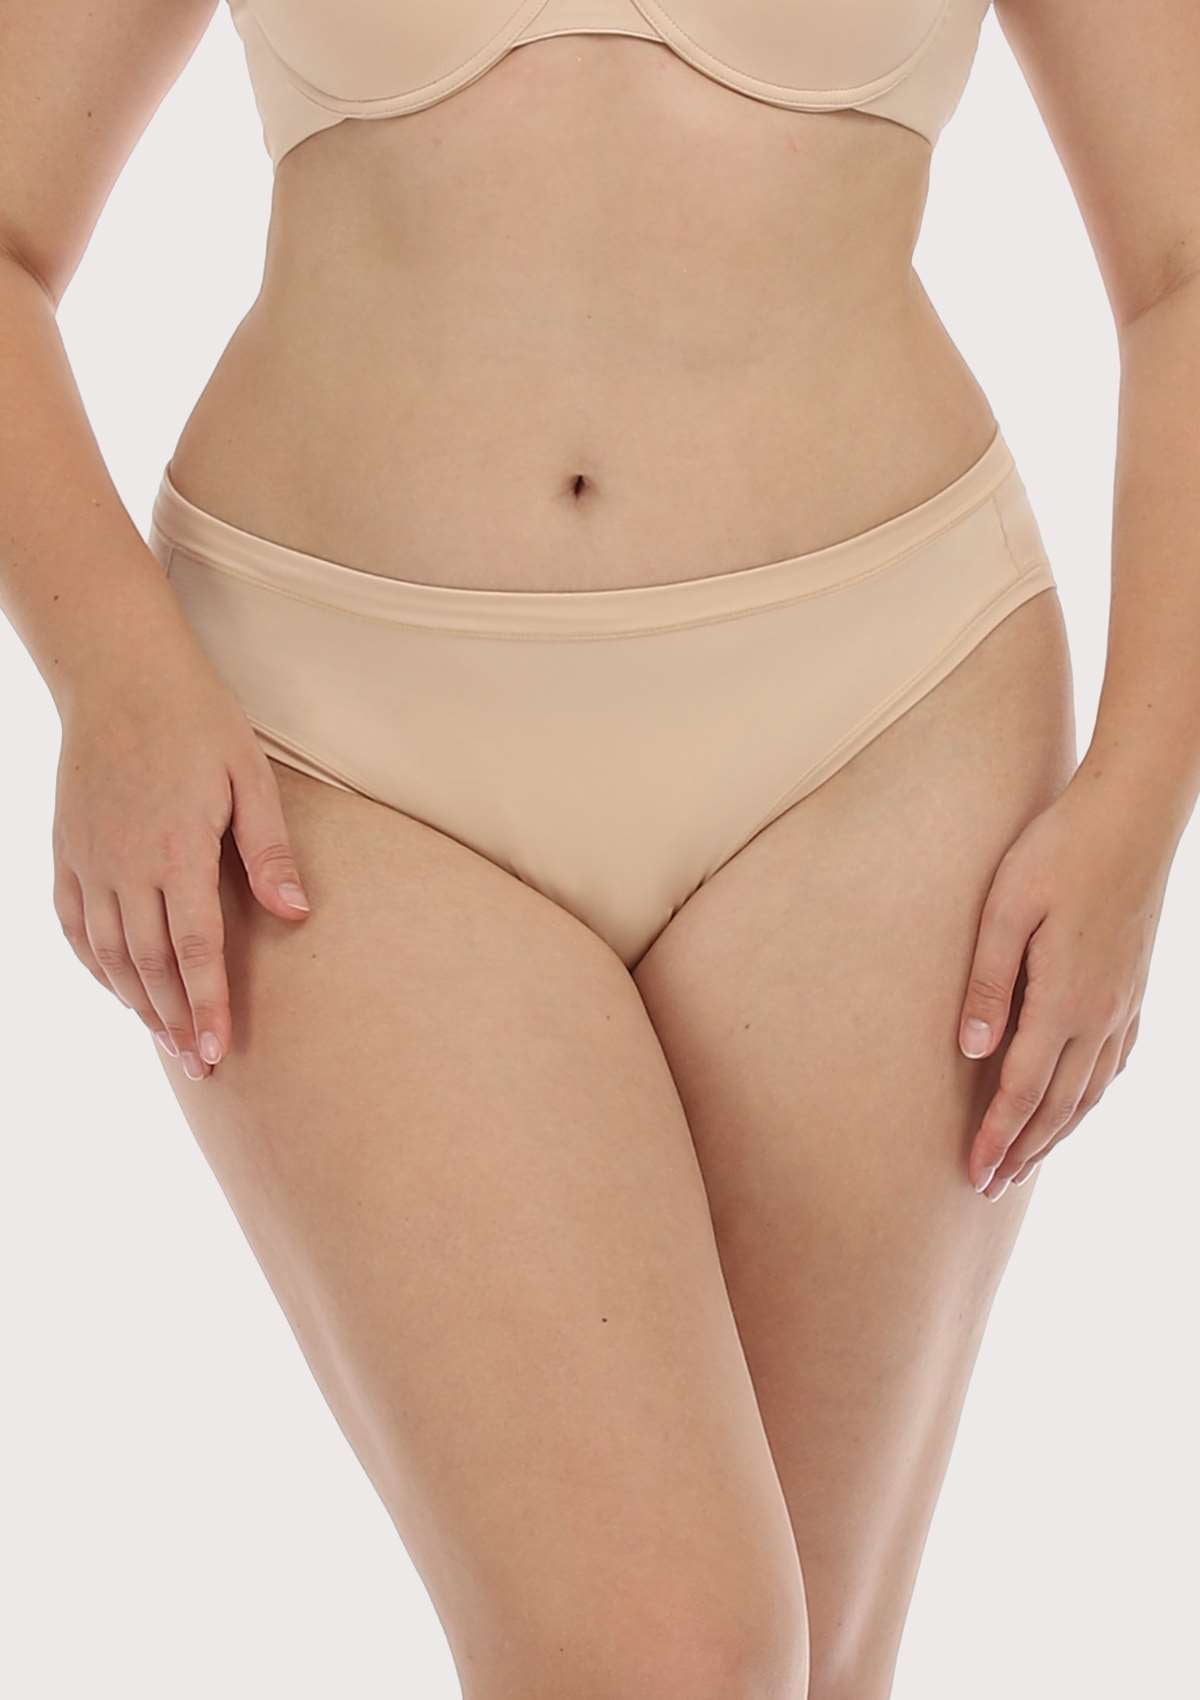 HSIA Comfort Stretch Cotton Everyday Bikini Panty - M / Beige